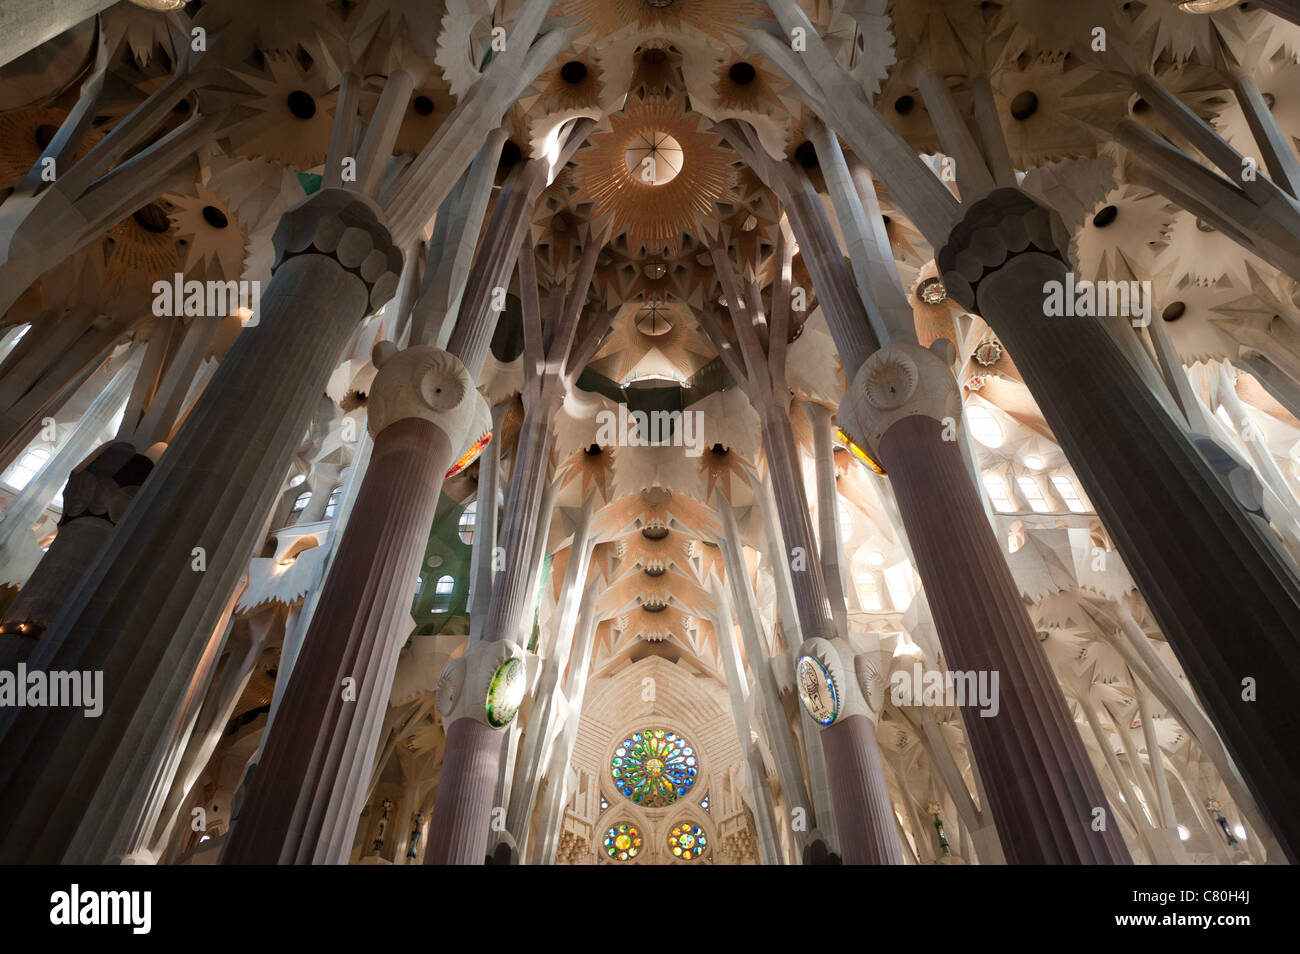 Das Innere der Basilika Sagrada Familia von Gaudi in Barcelona, Spanien entworfen. Stockfoto